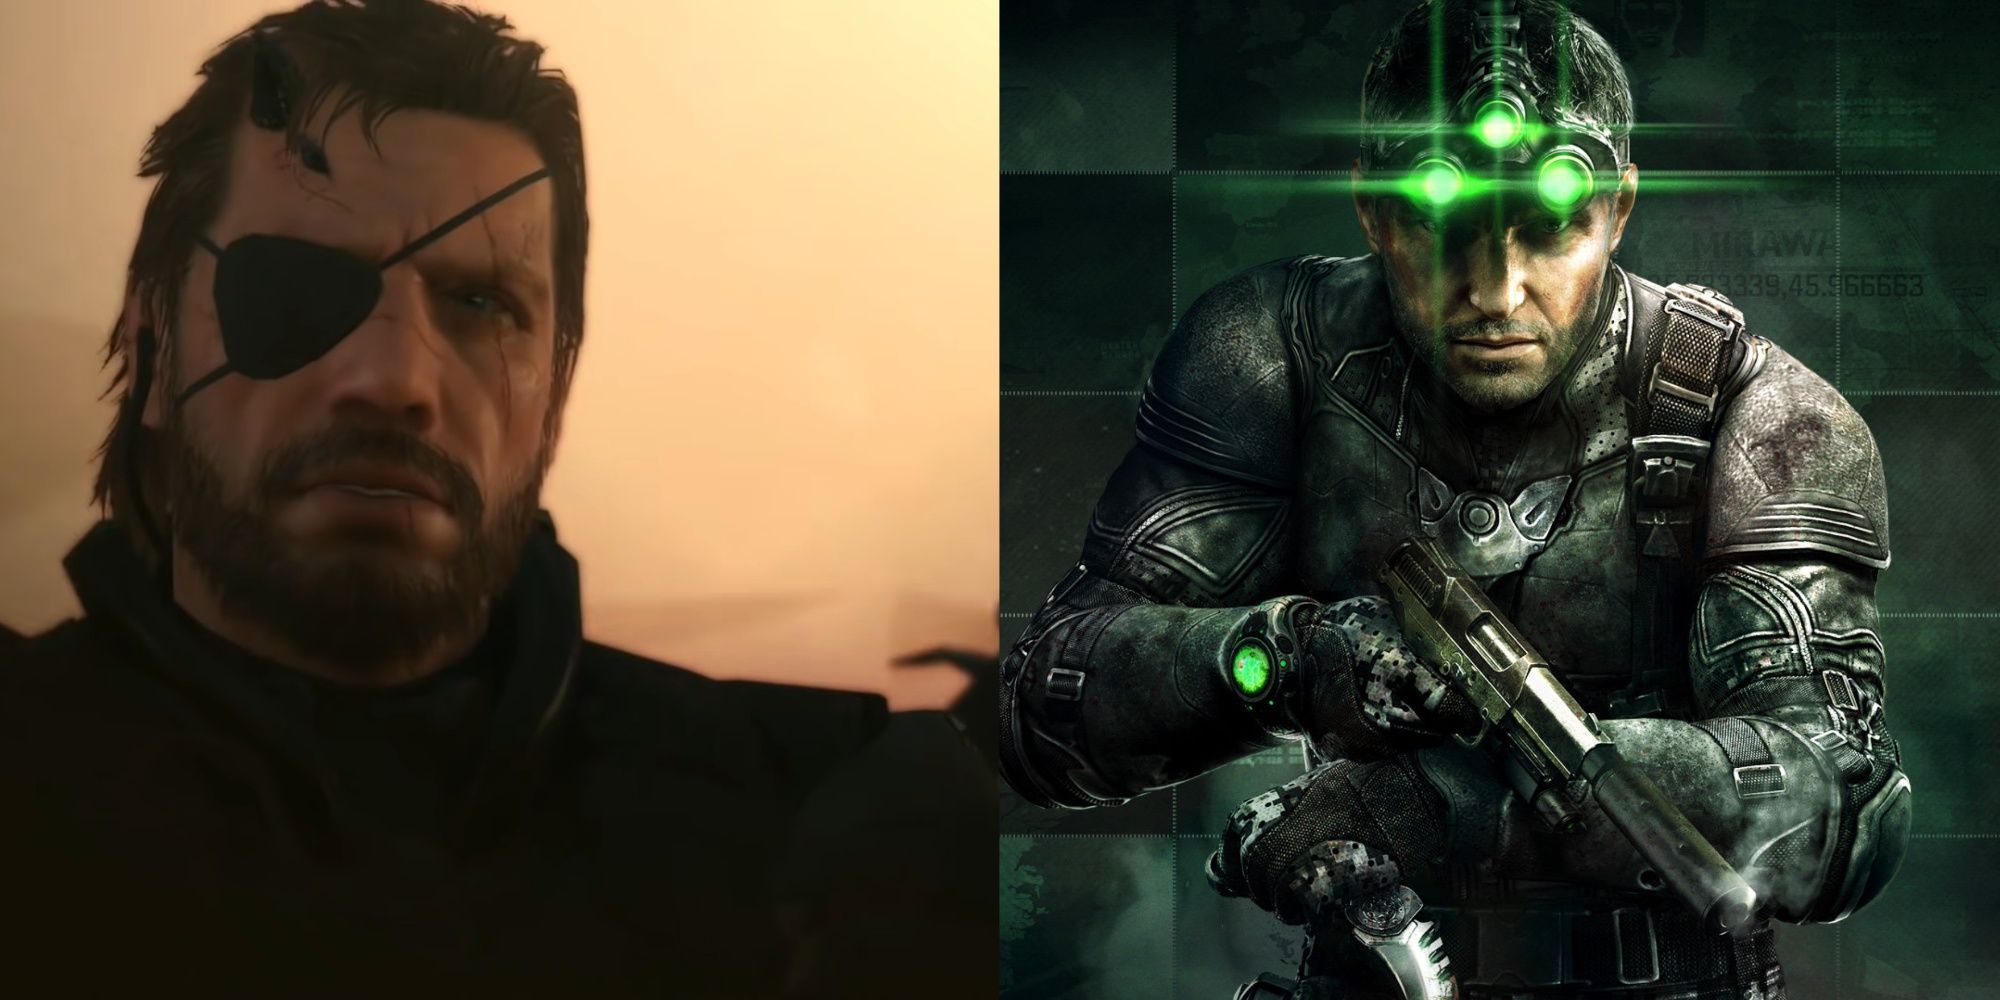 Venom Snake in Metal Gear Solid 5 and Sam Fisher from Splinter Cell: Blacklist.